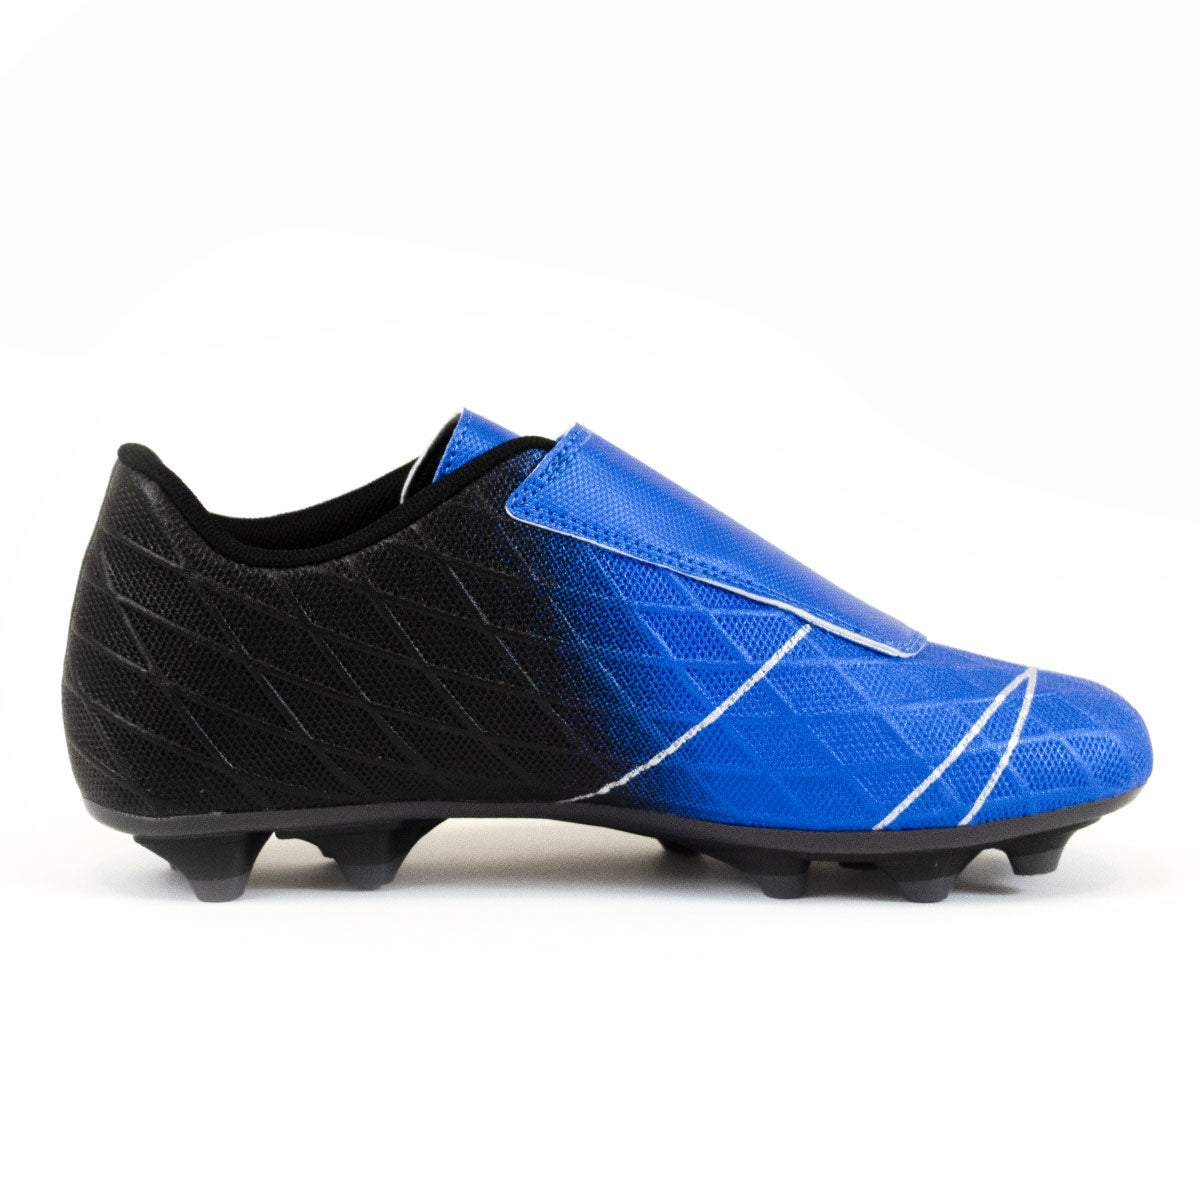 Precision Training Matrix FG Football Boots - Youth - Blue/Black